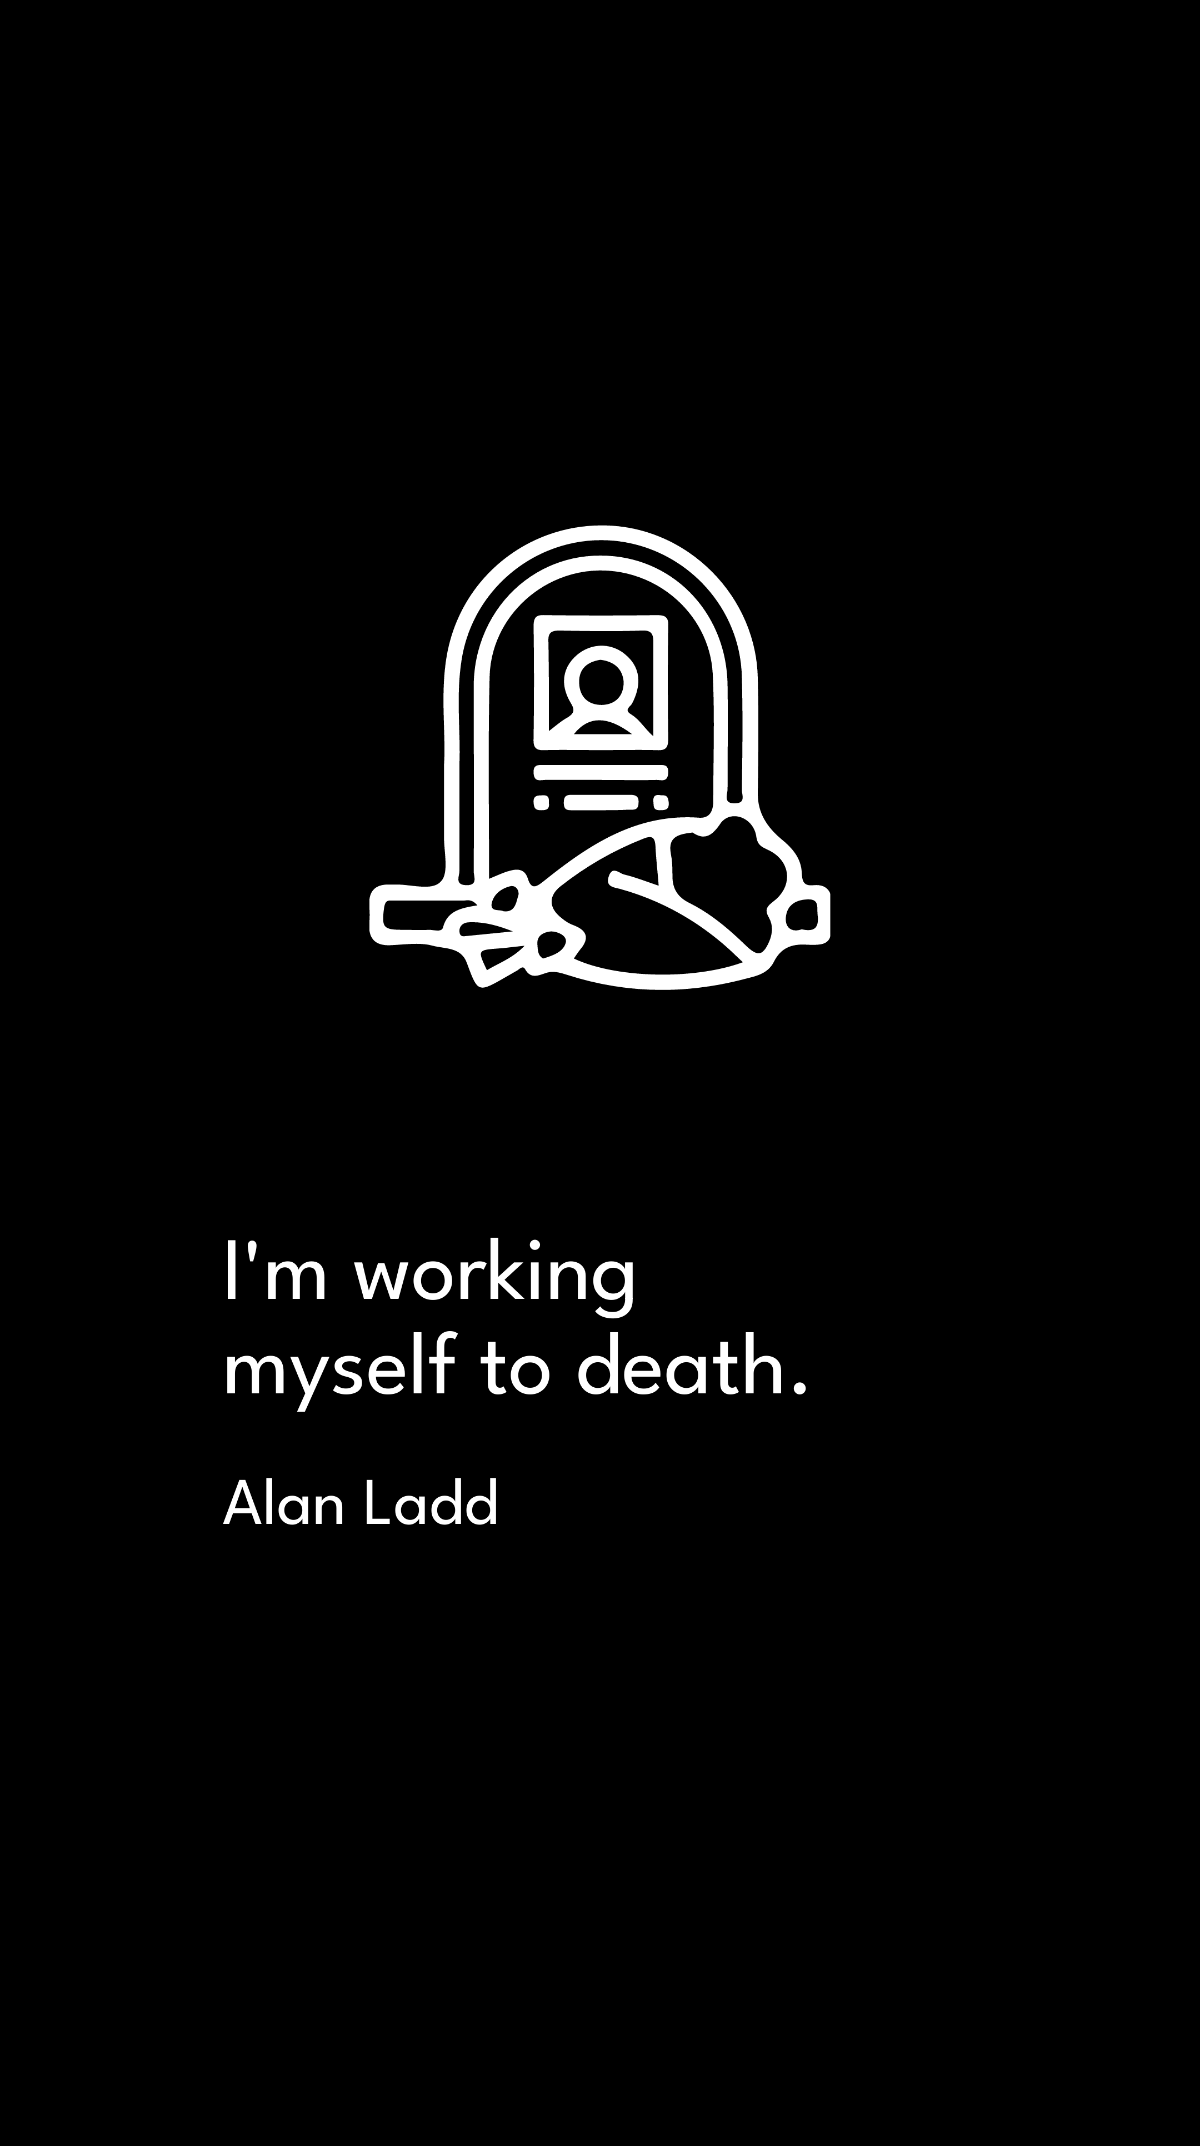 Alan Ladd - I'm working myself to death. Template